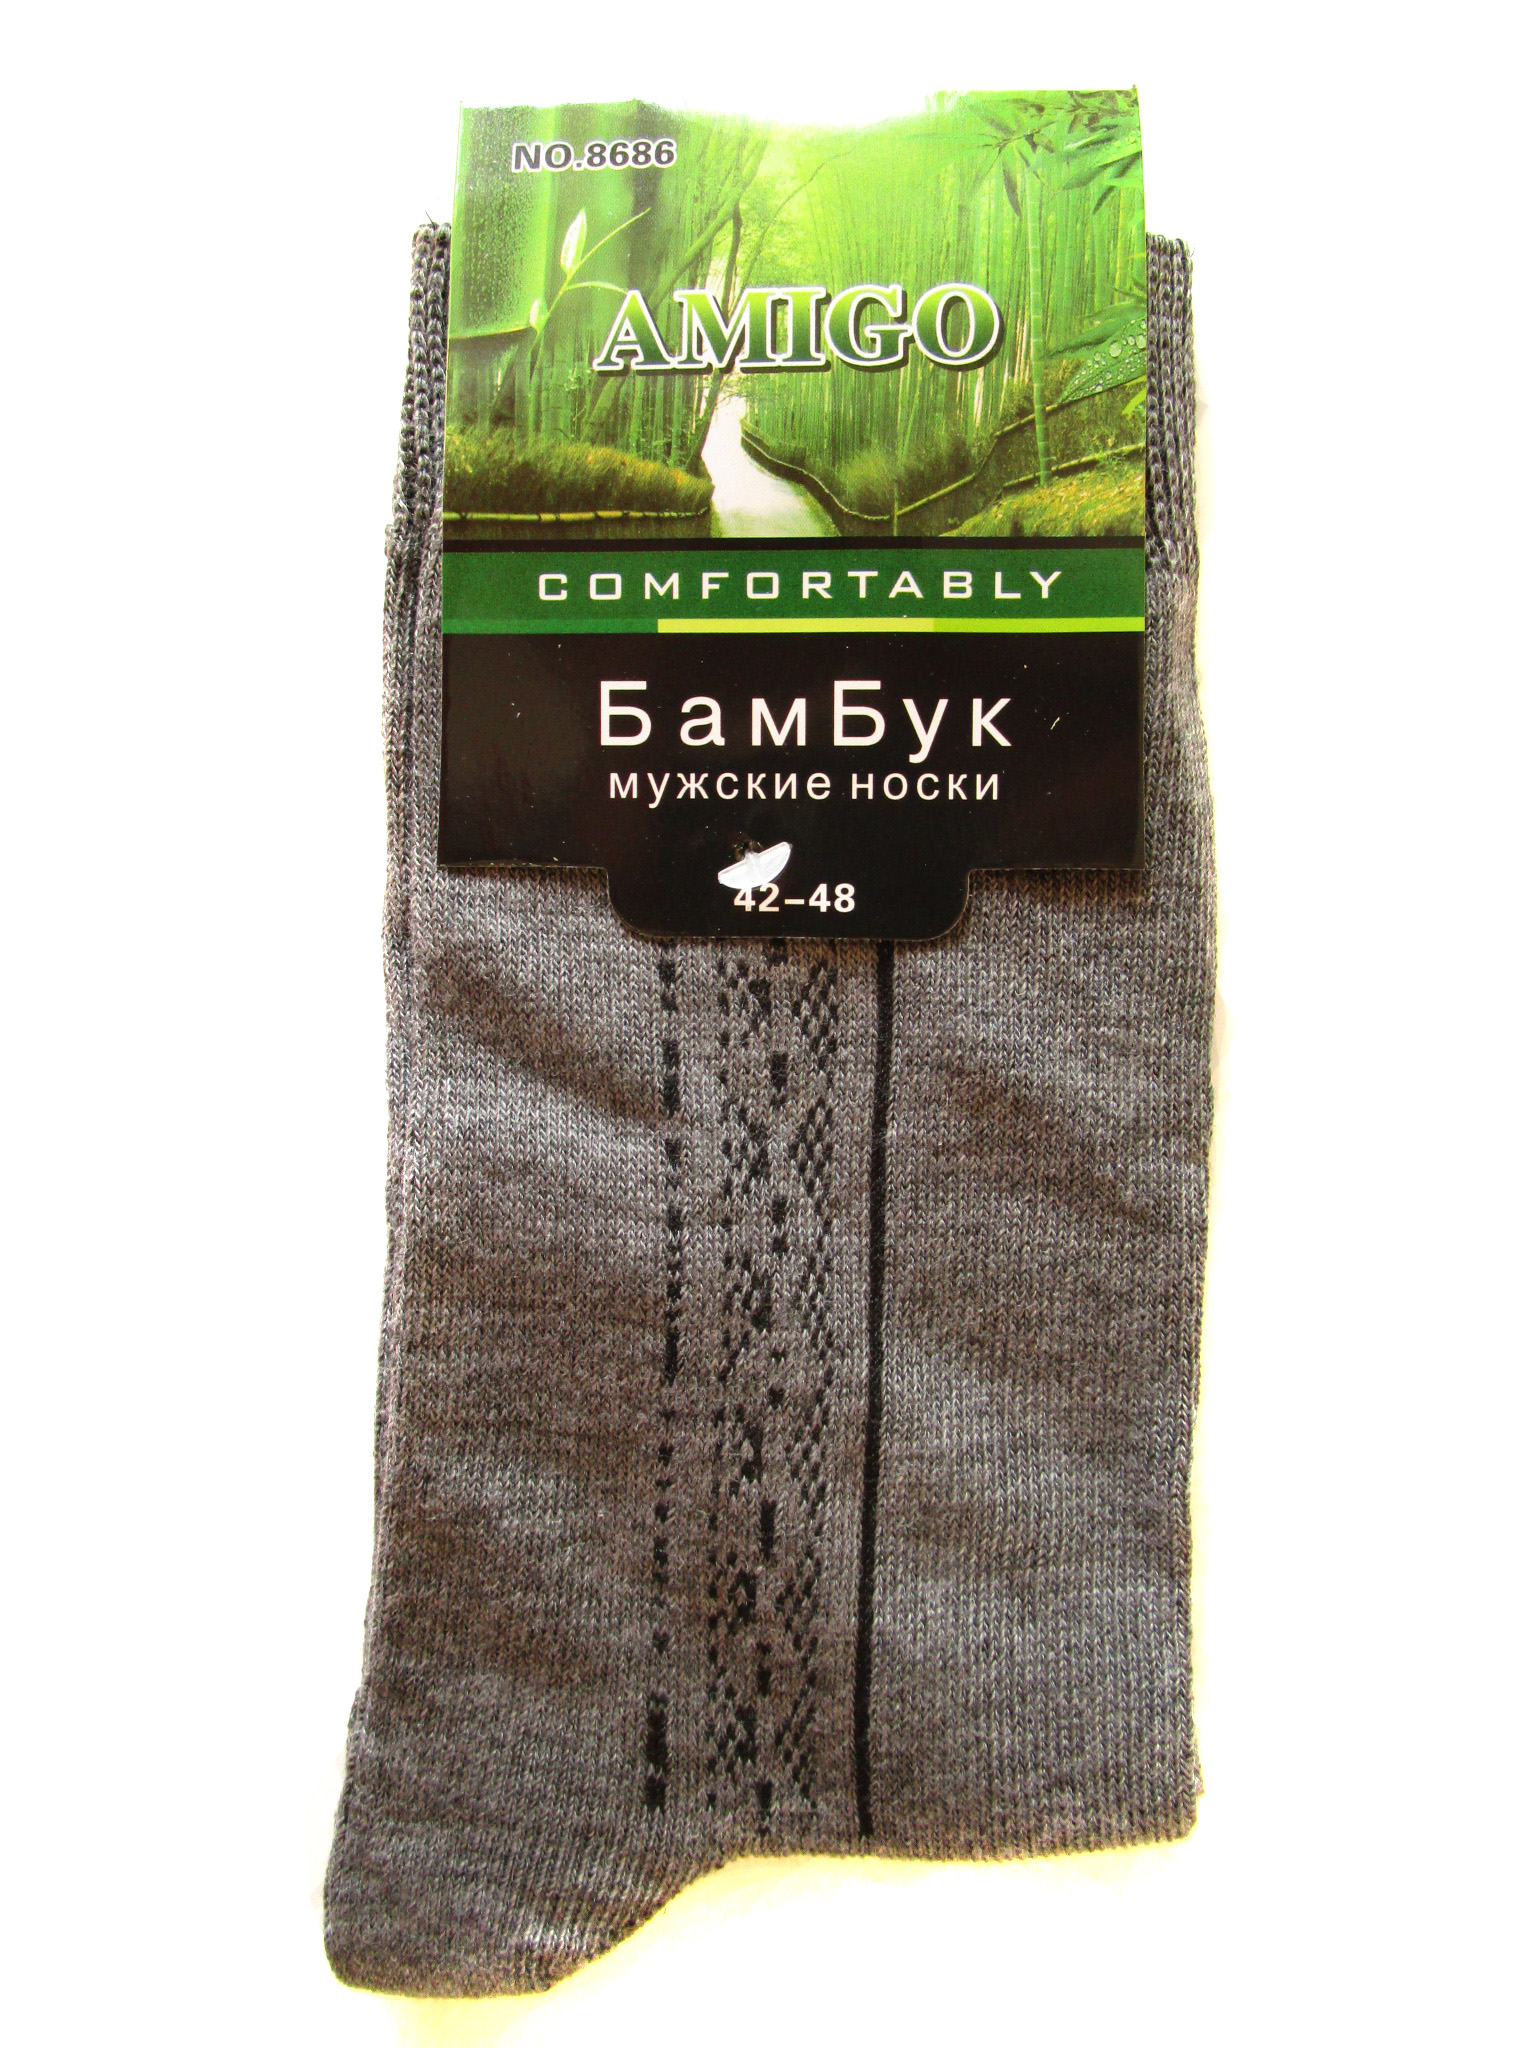 Мужские носки "Amigo" (арт.8686)